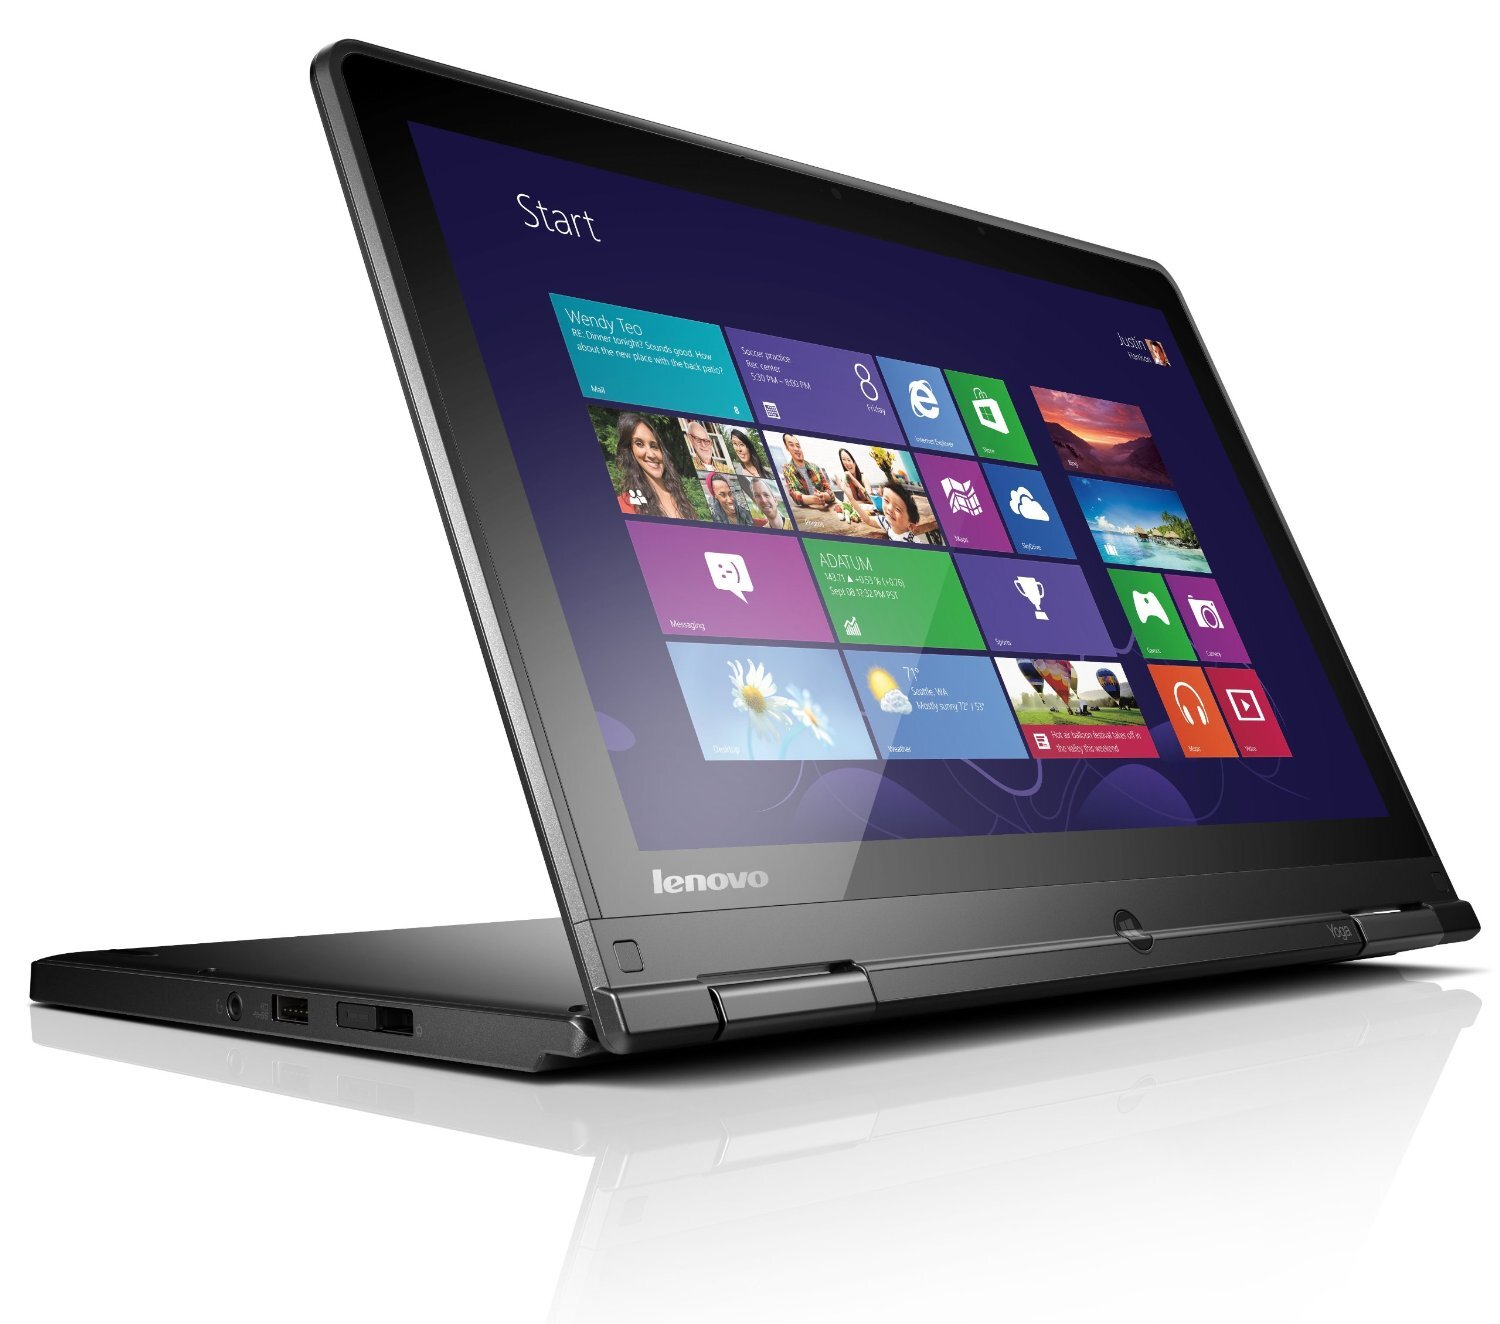 Laptop Lenovo Thinkpad Yoga S1 - Intel Core i3-4010U 1.7GHz, 4GB DDR3, 500GB HDD + 16GB SSD, VGA Intel HD Graphics 4400, 12.5 inch